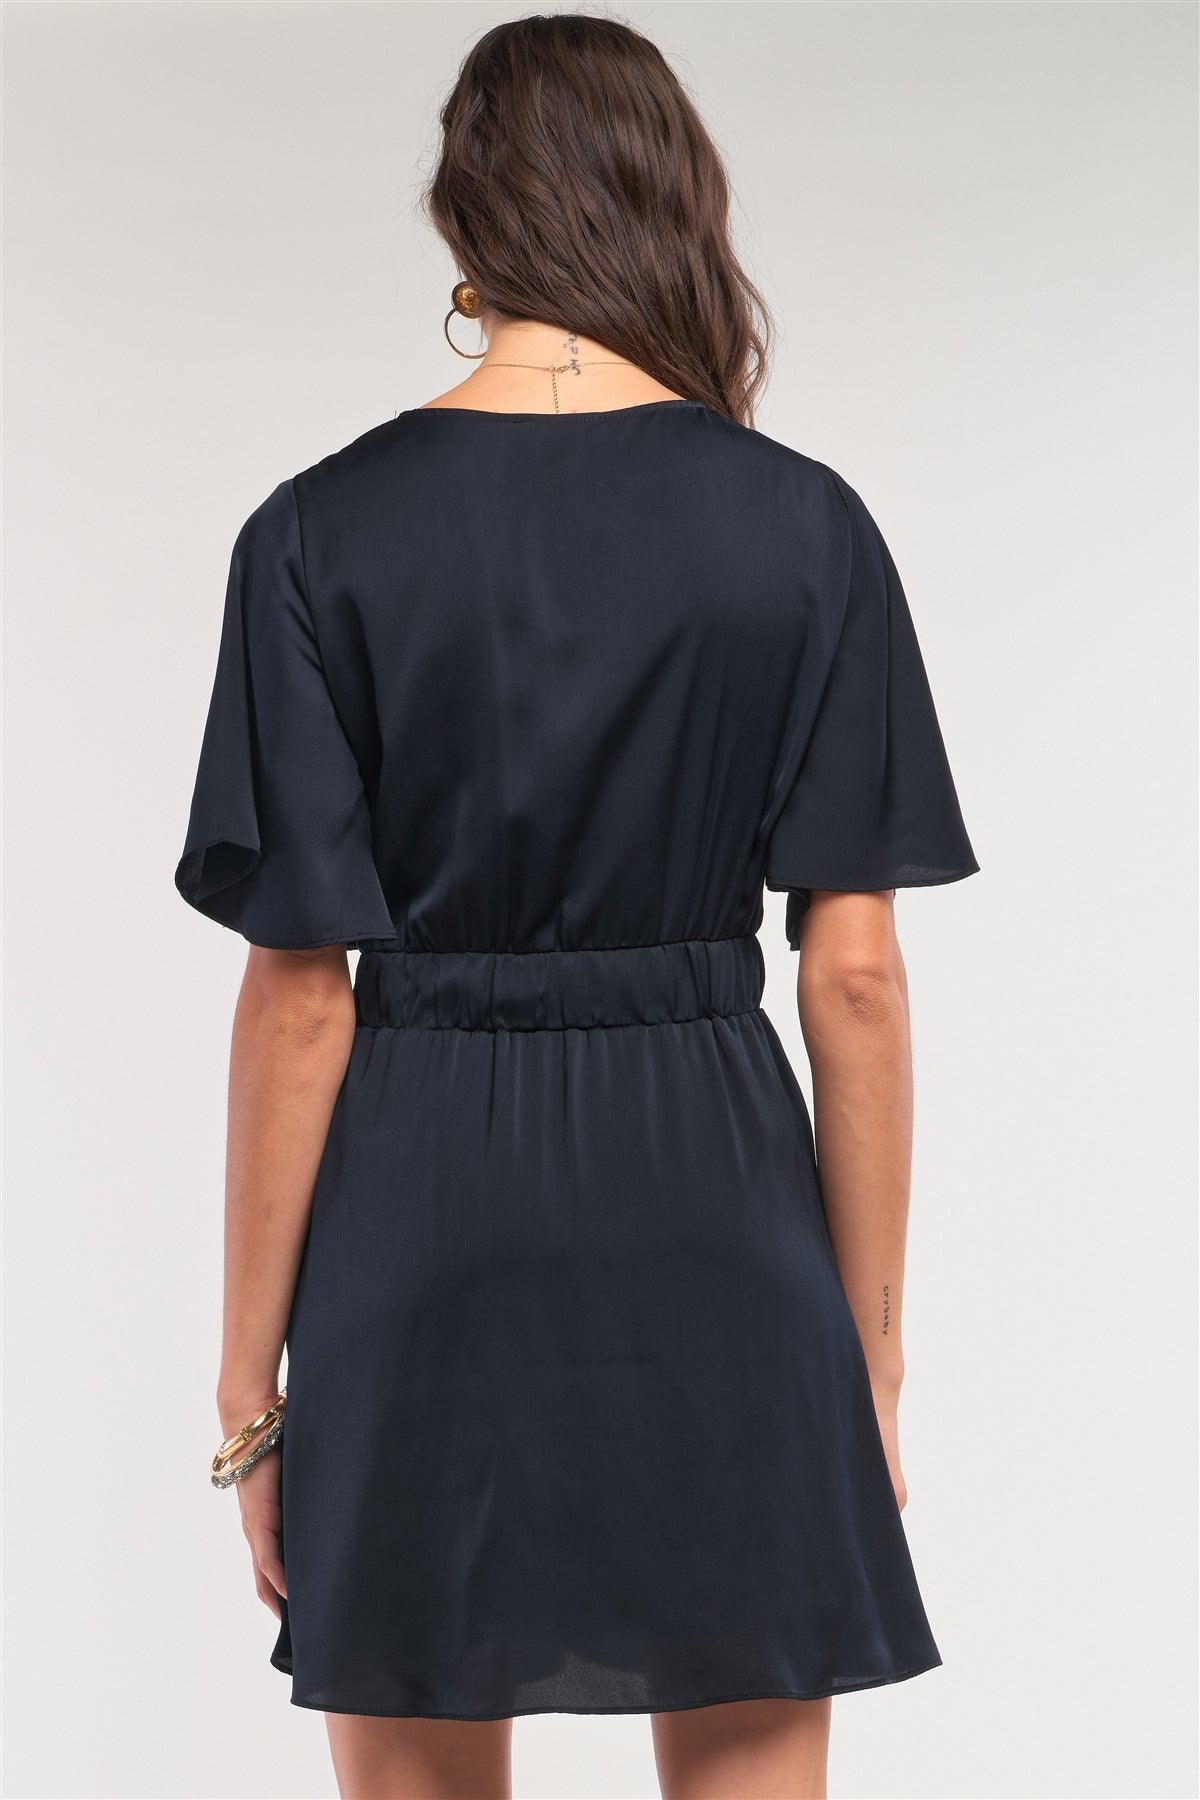 Jade Black Satin Plunging Neckline Gathered Twist Detail Front Angel Sleeve Mini Dress /1-2-2-1